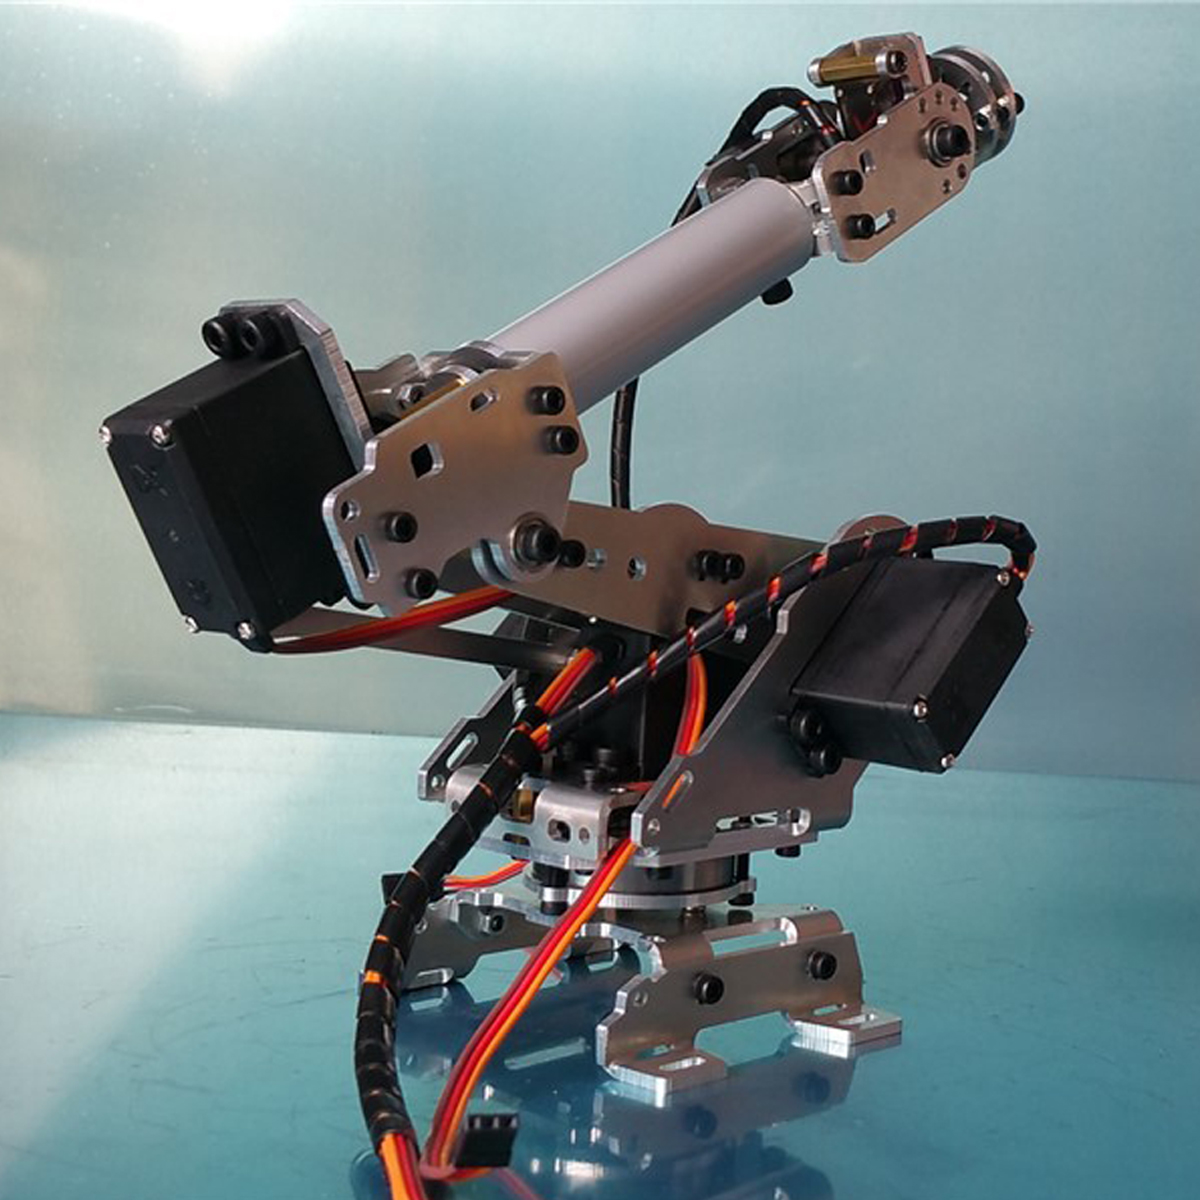 6DOF Mechanical Robot Arm Claw With Servos For Robotics Arduino DIY Kit 7